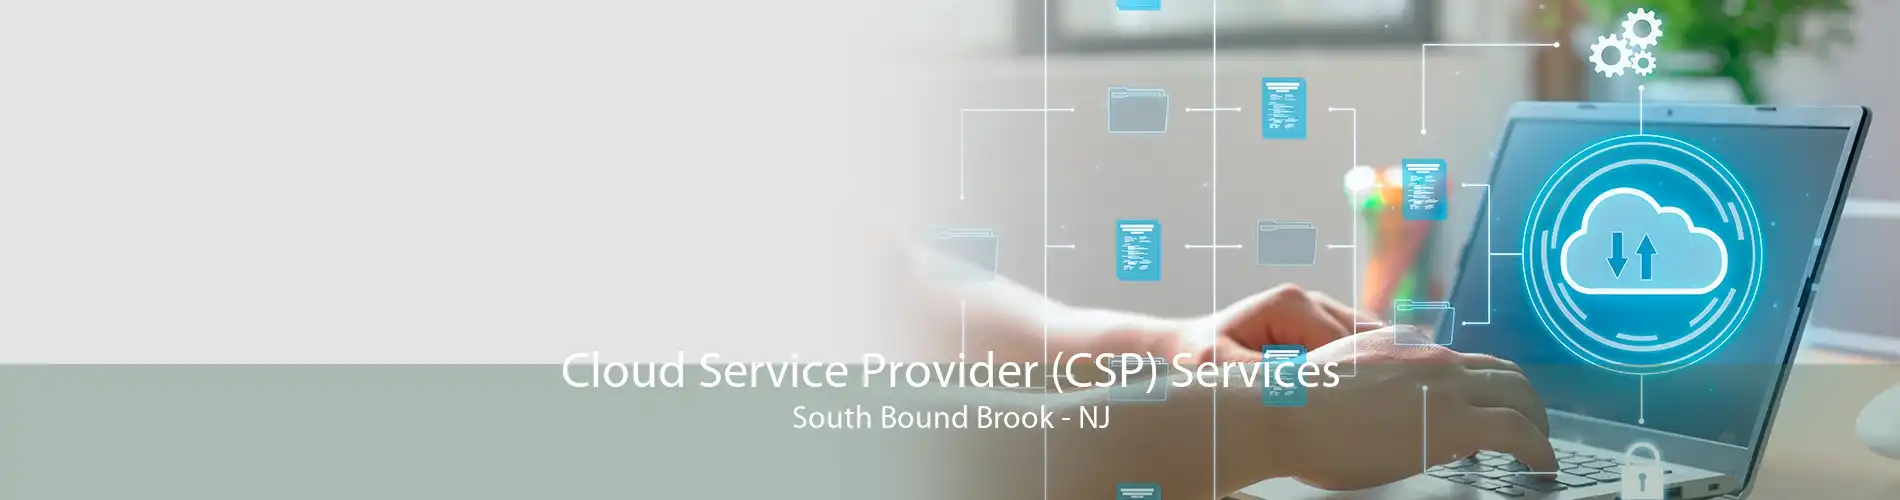 Cloud Service Provider (CSP) Services South Bound Brook - NJ